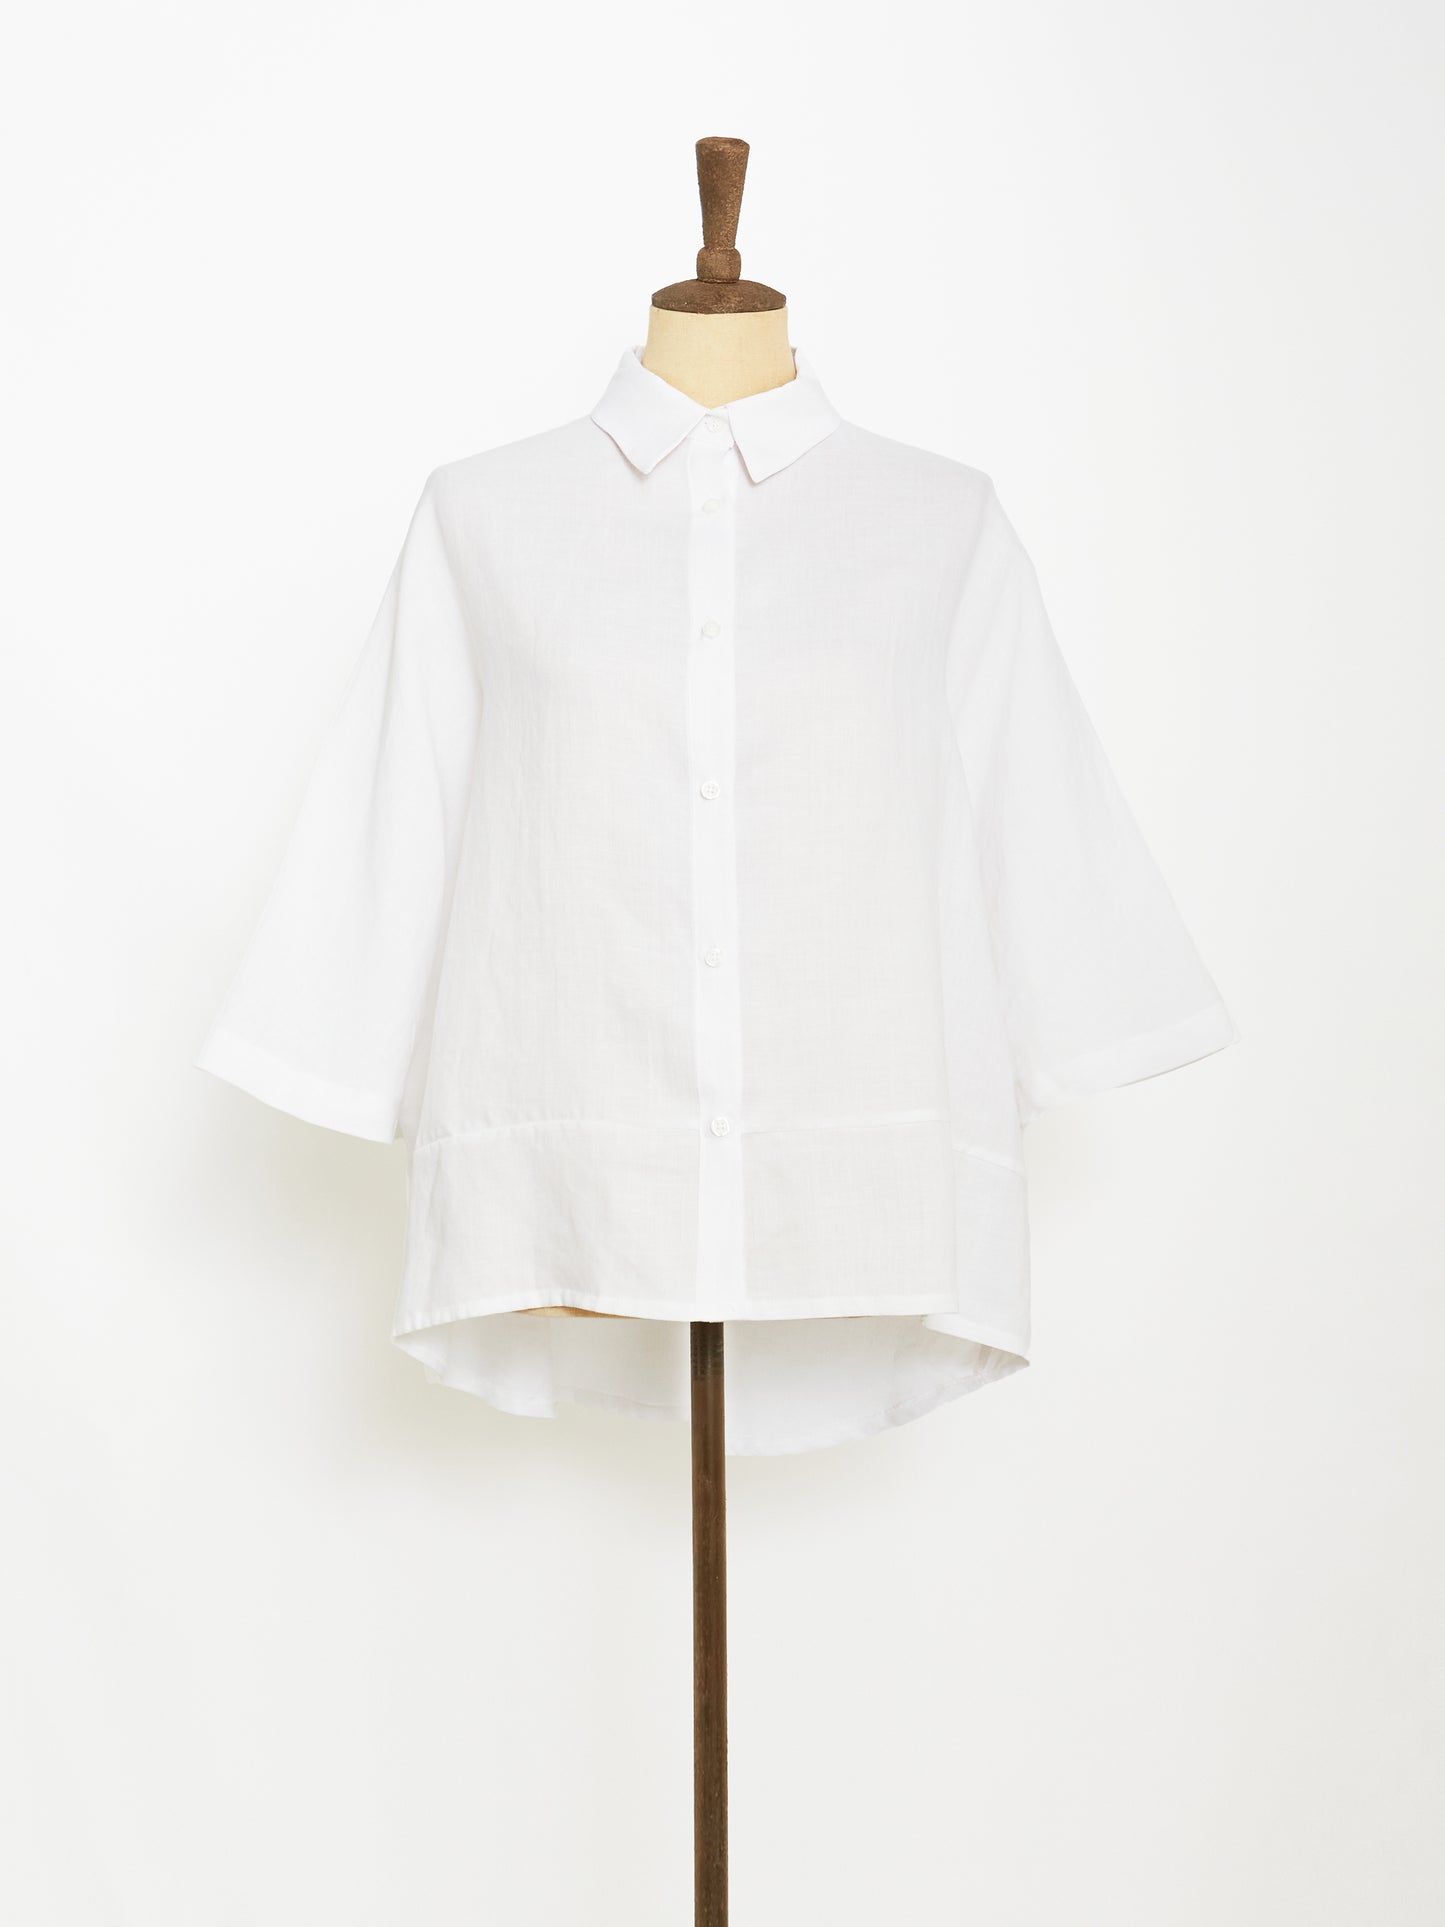 The Pure Linen Shirts (White)